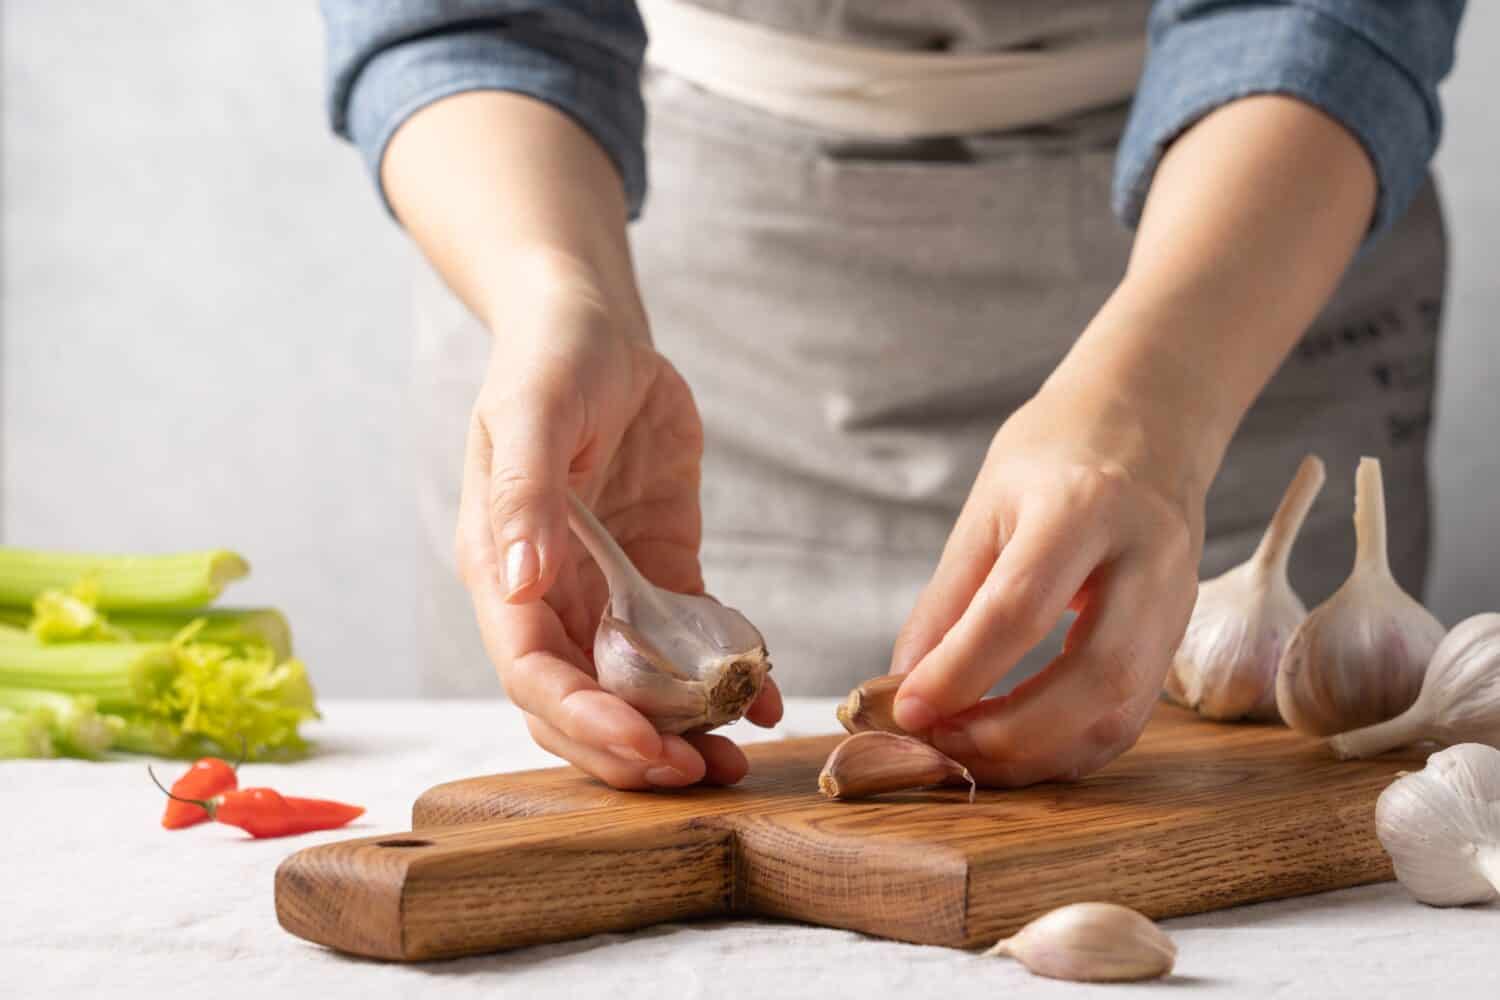 Women's hands holding garlic. Cooking homemade healthy food